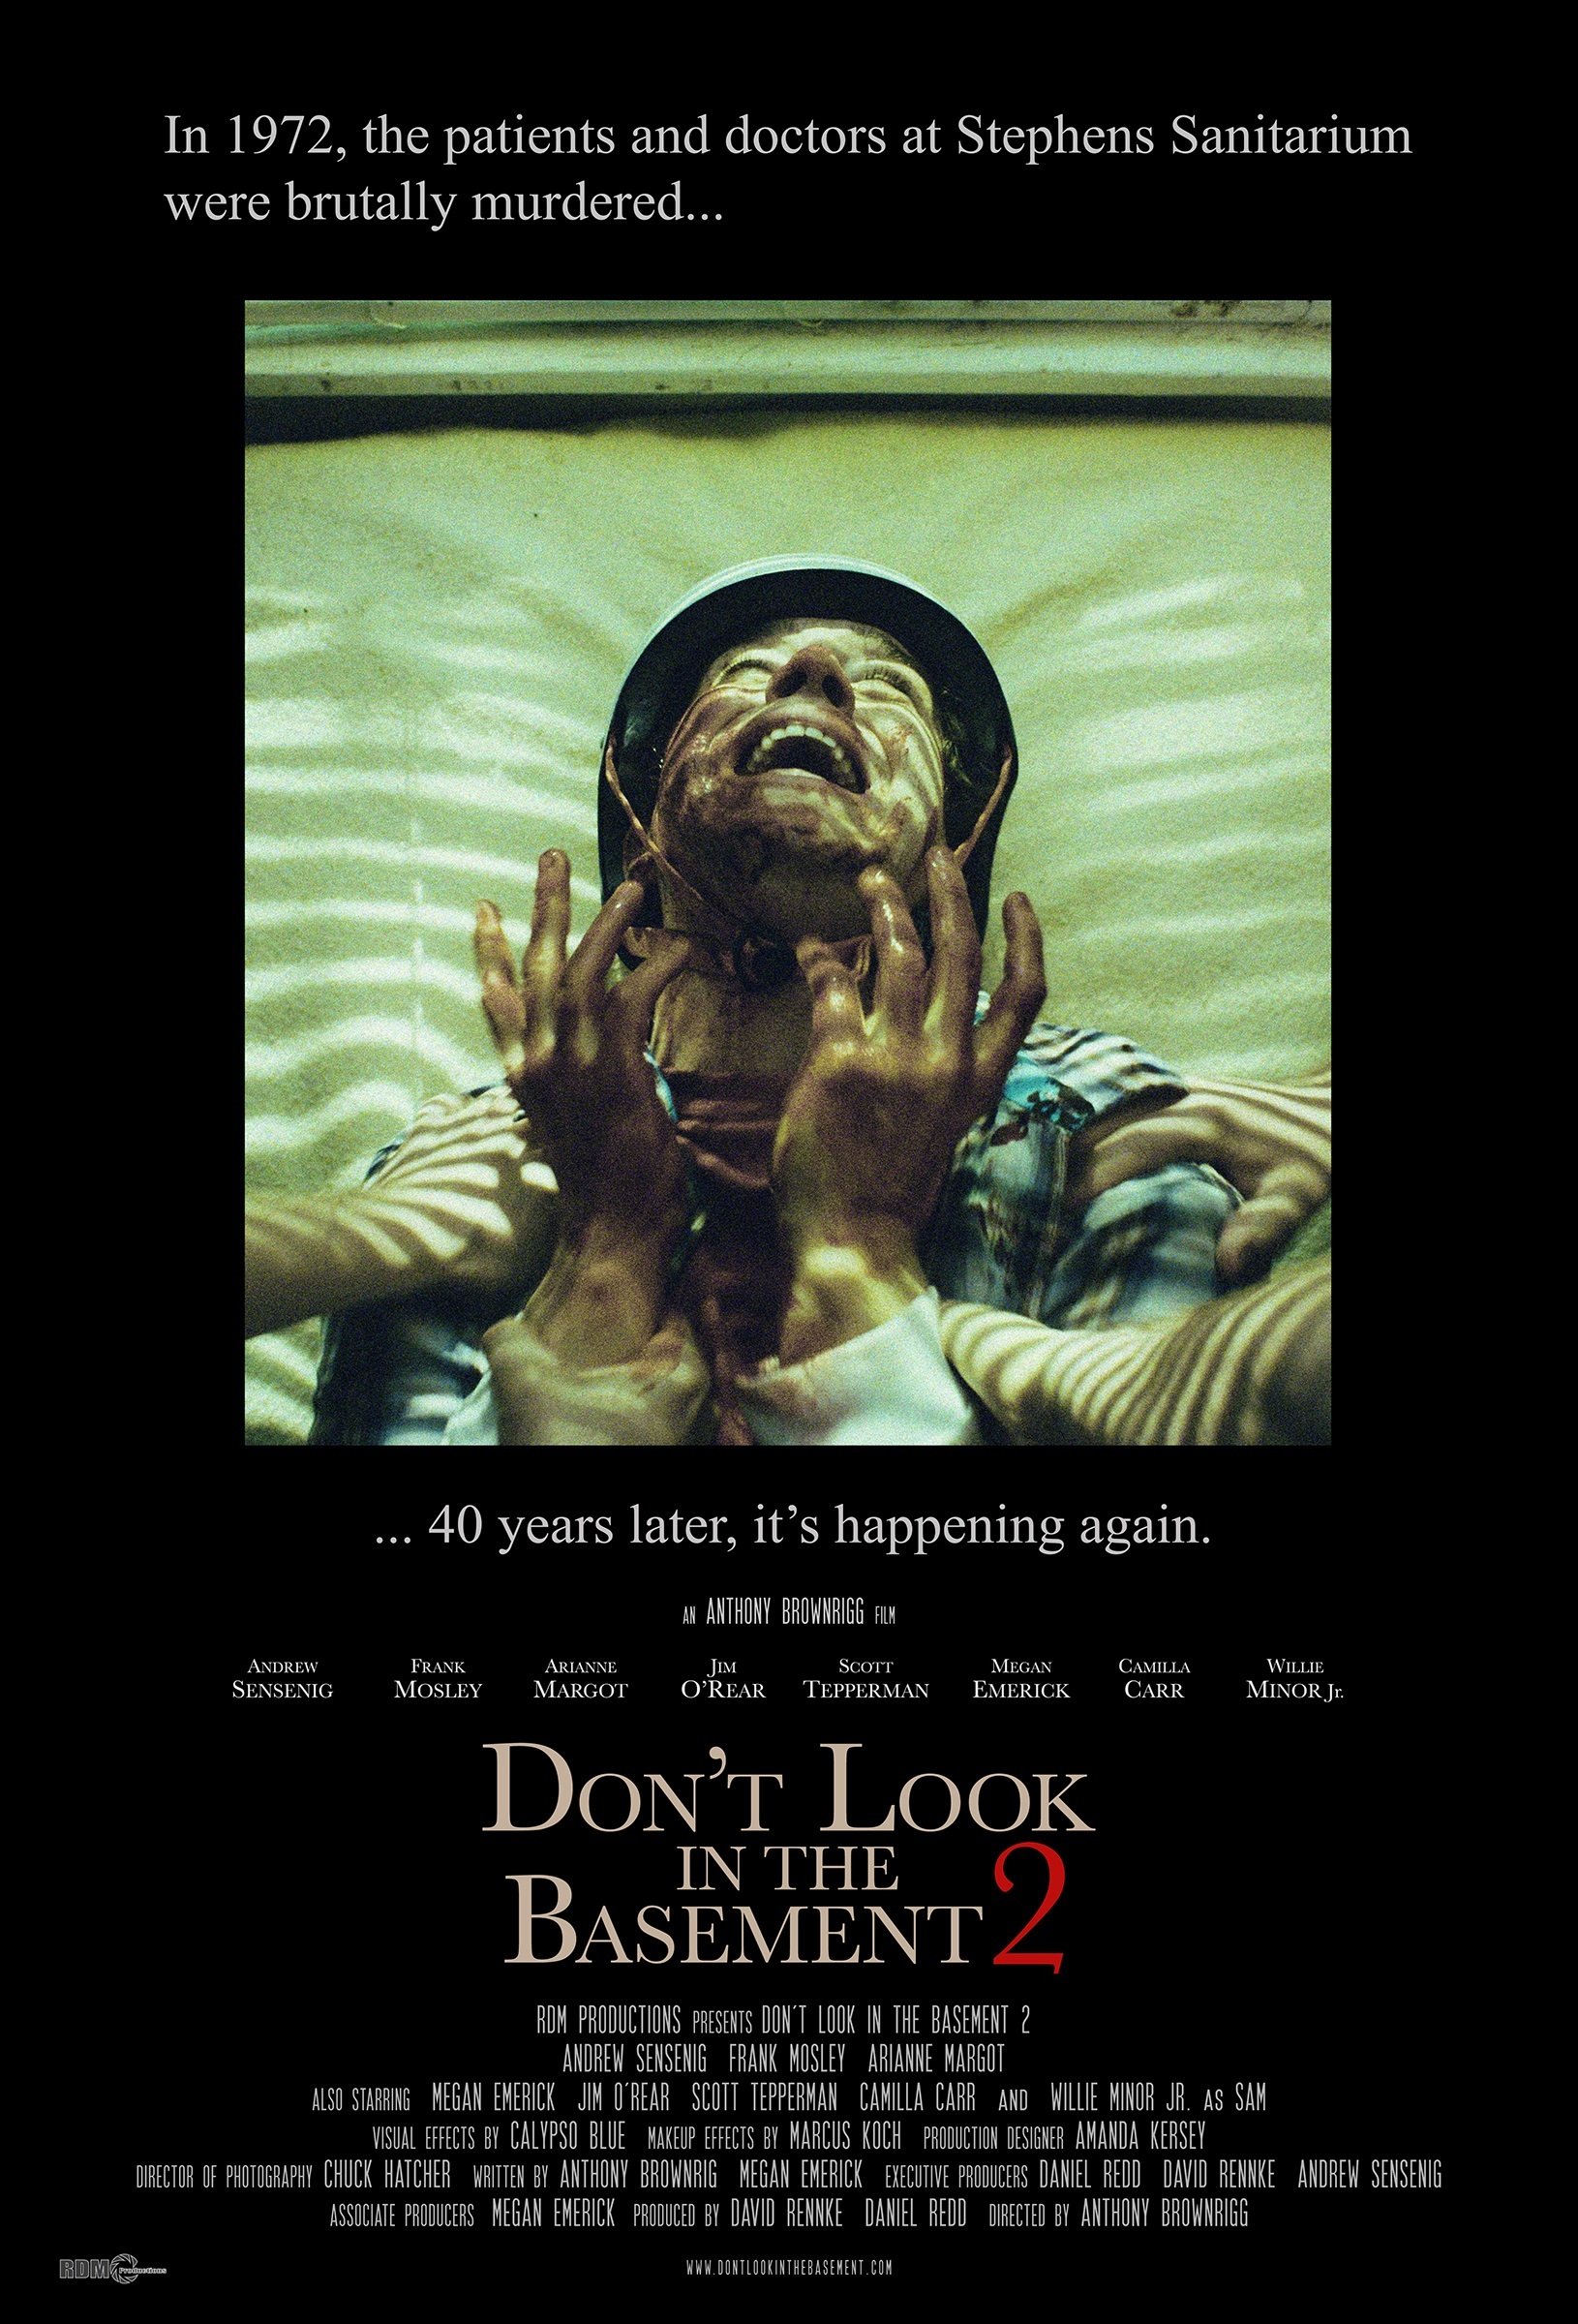 Nonton film Dont Look In The Basement 2 layarkaca21 indoxx1 ganool online streaming terbaru